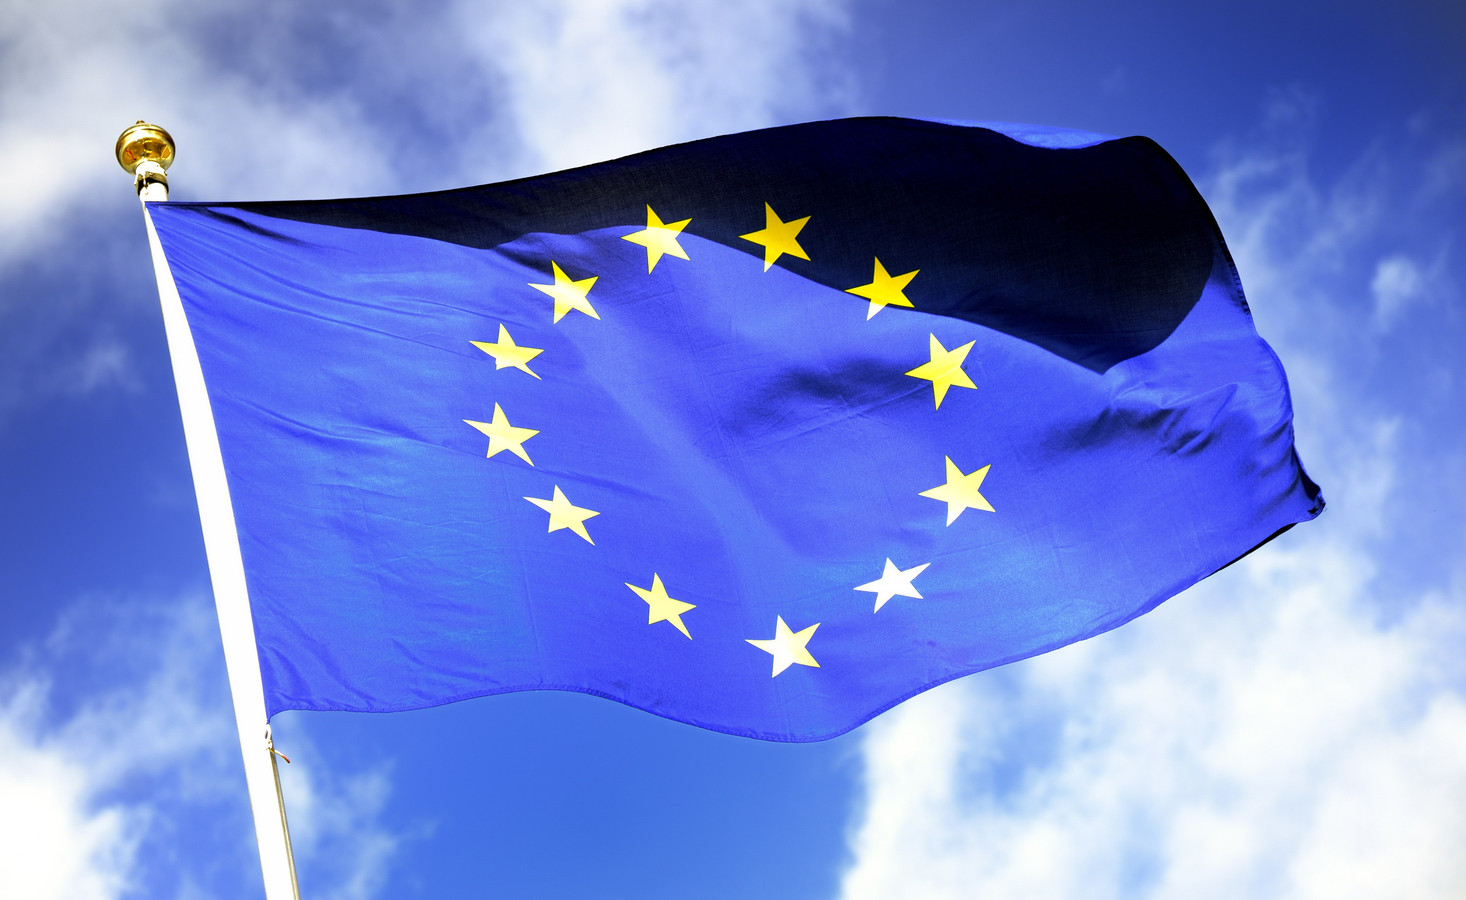 De vlag van de Europese Unie.